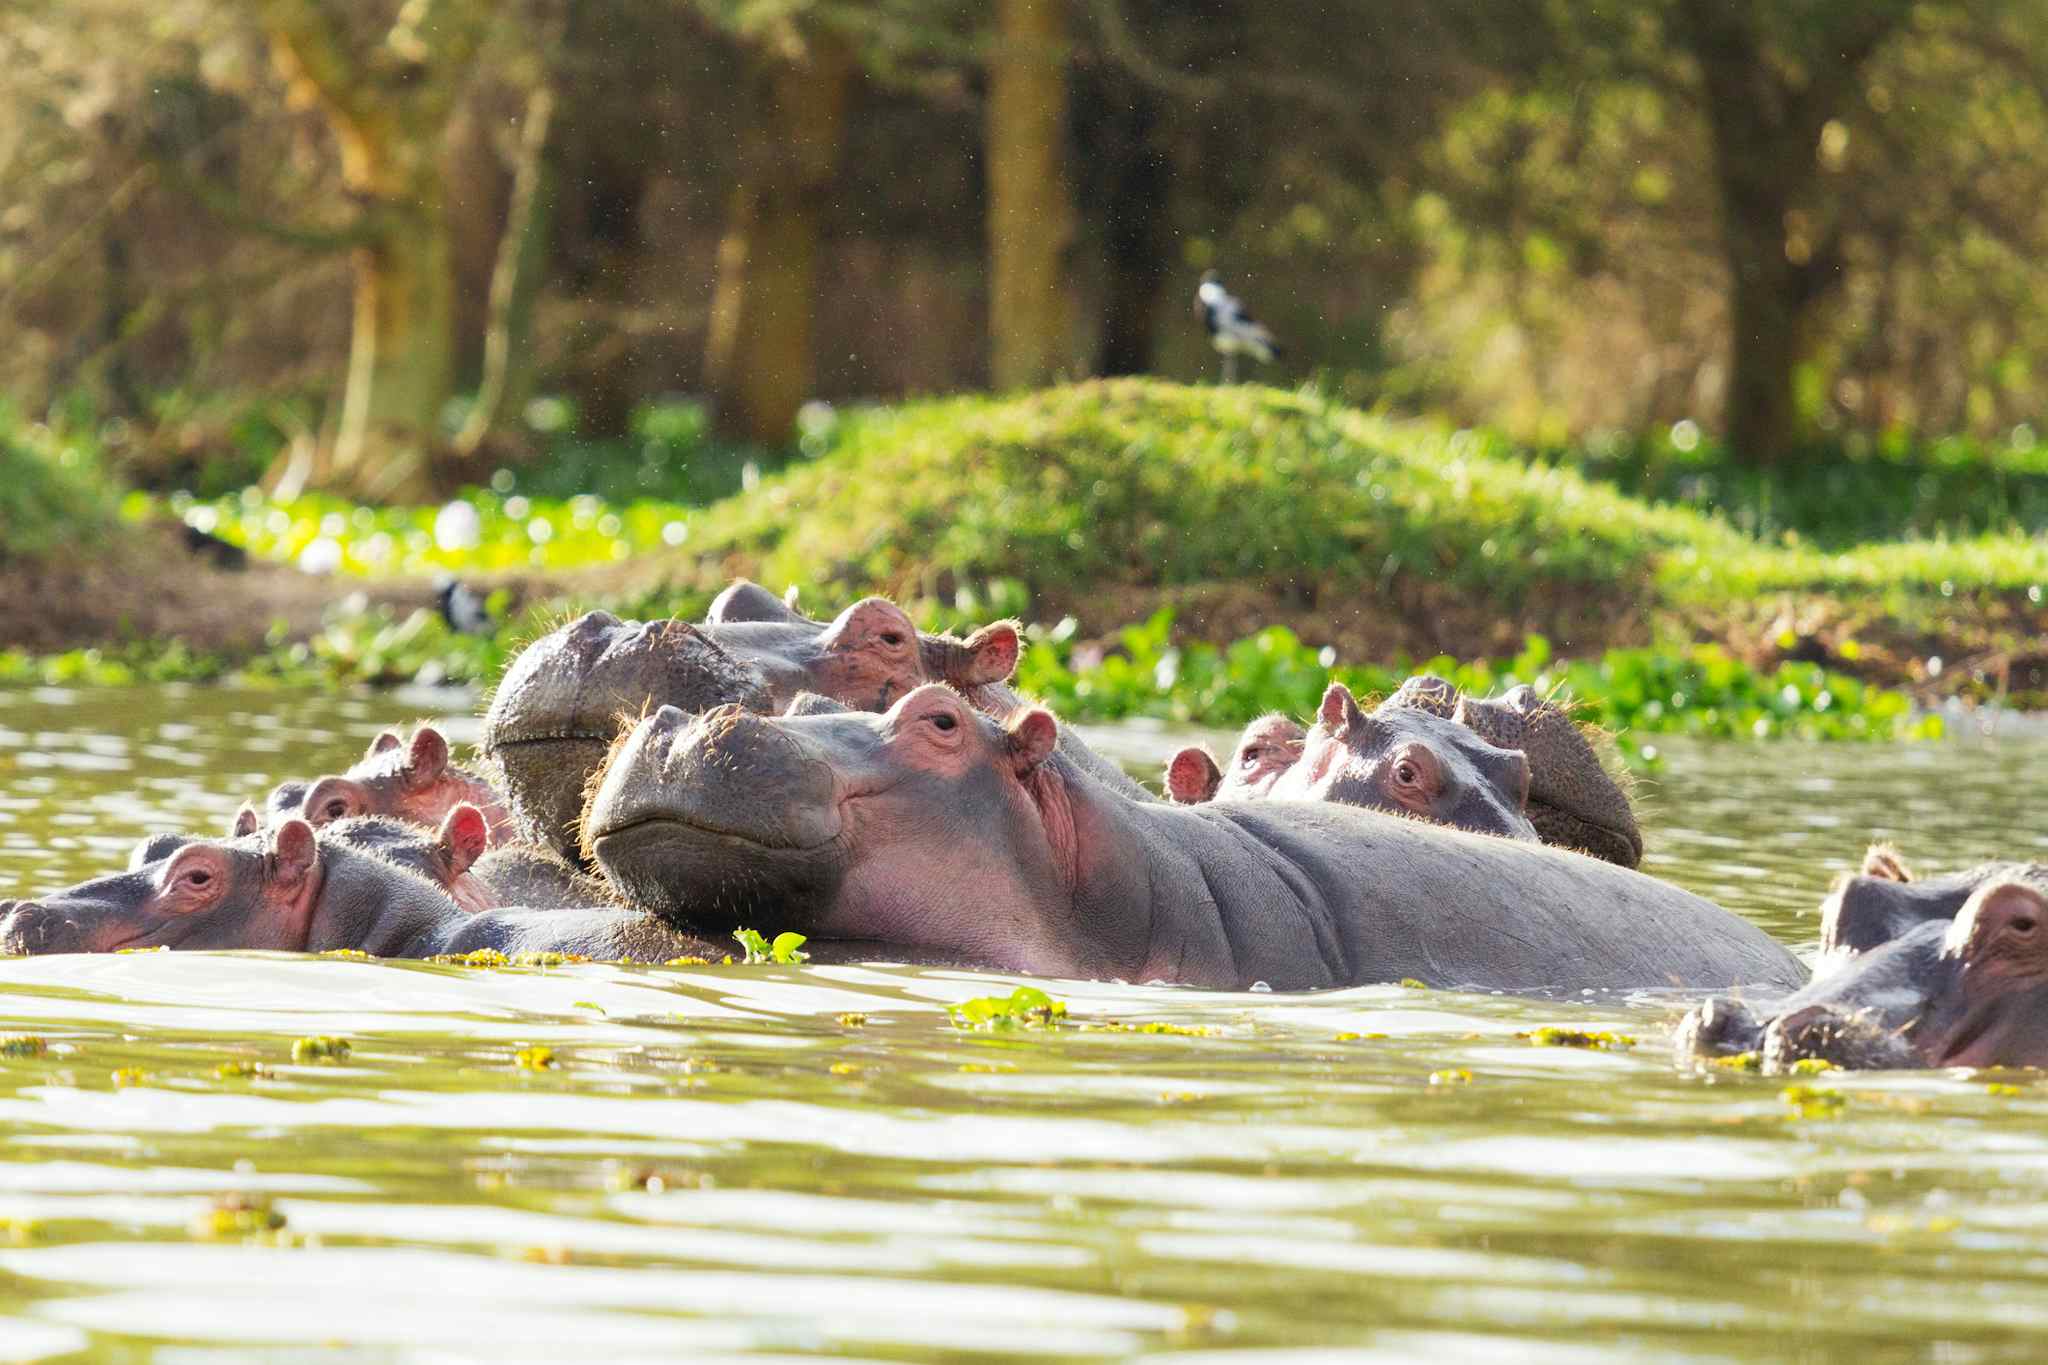 Hippopotamus showing over the waters of Lake Naivasha
Getty #171067582